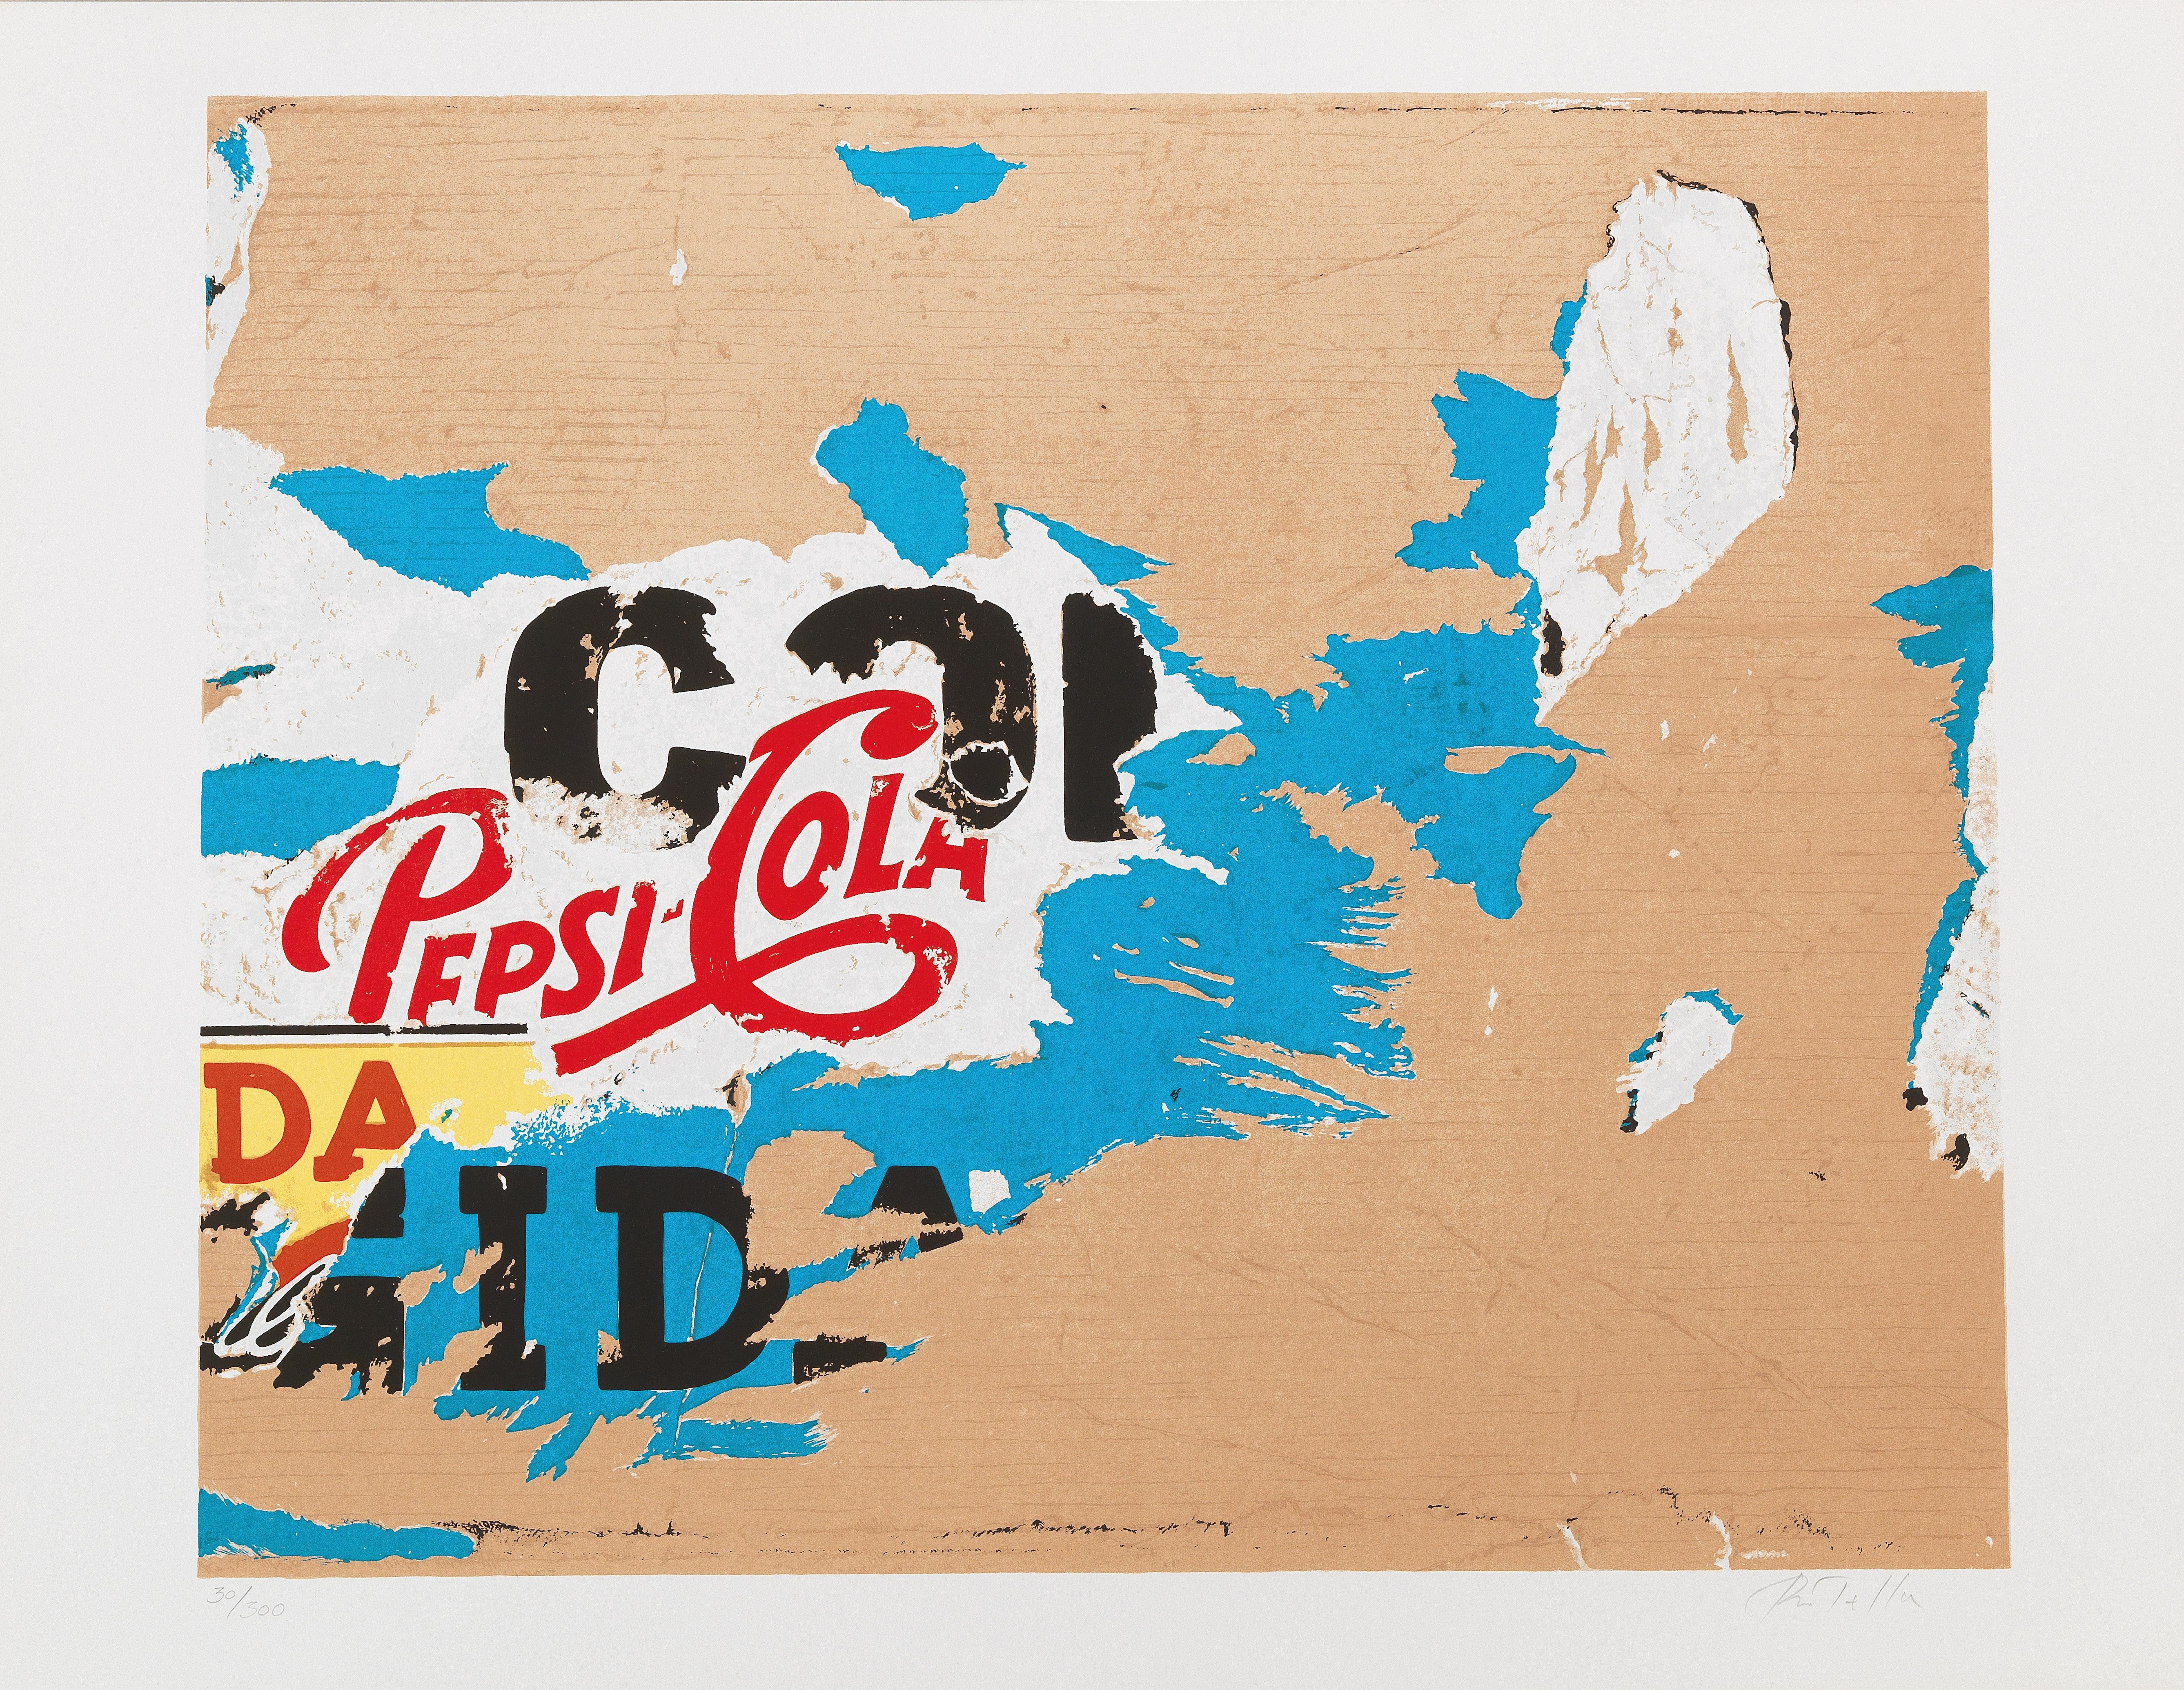 "Pepsi" by Mimmo Rotella, 1980